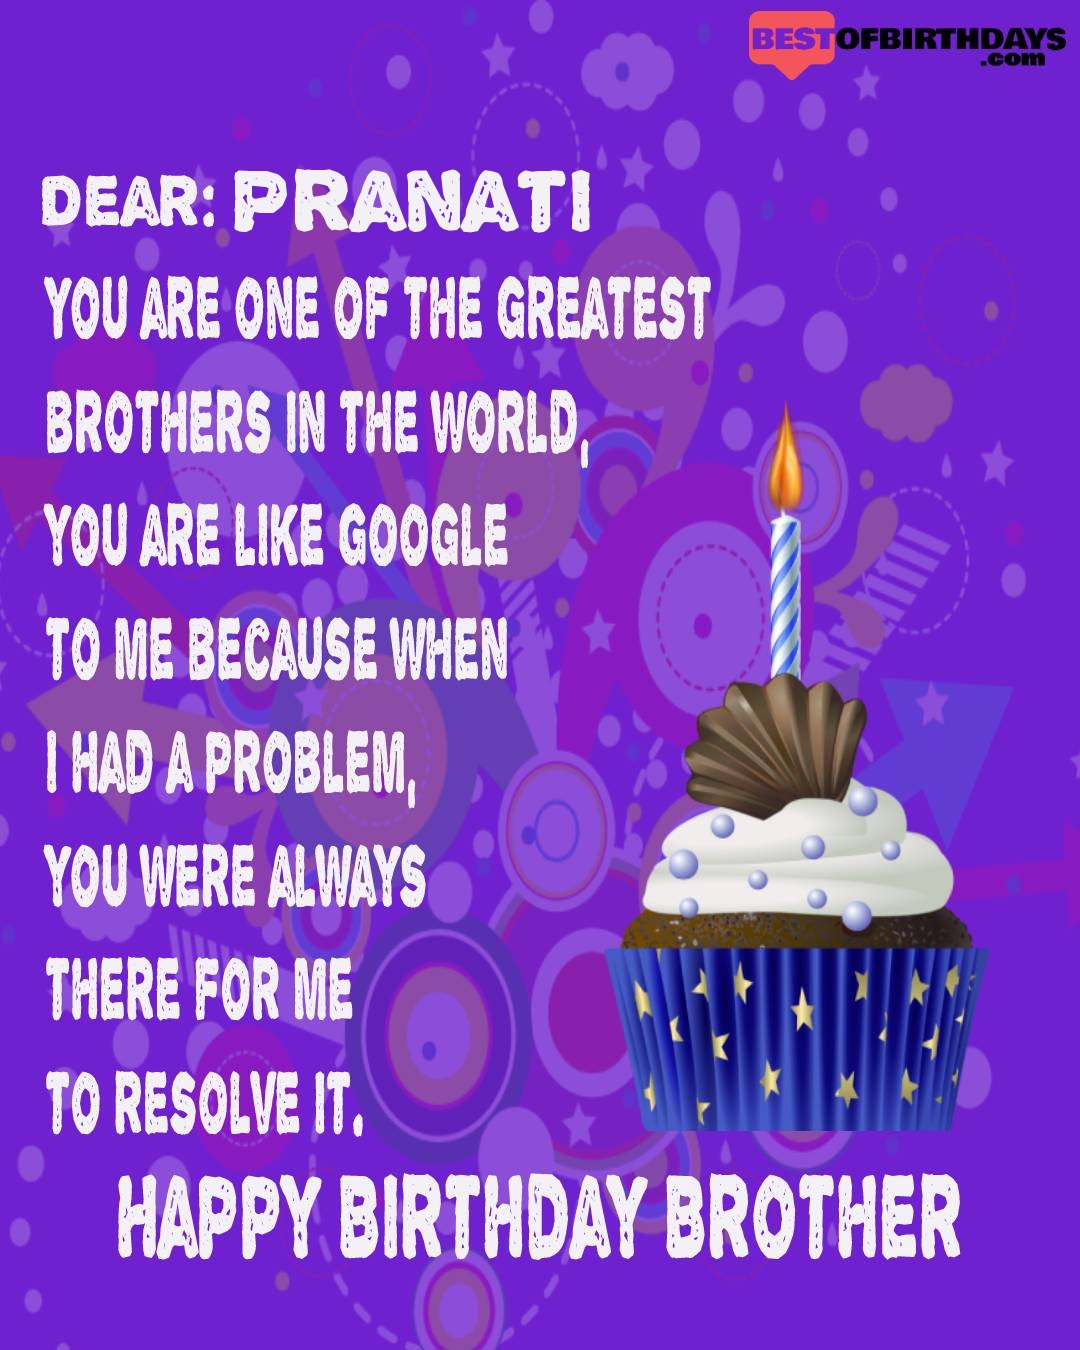 Happy birthday pranati bhai brother bro